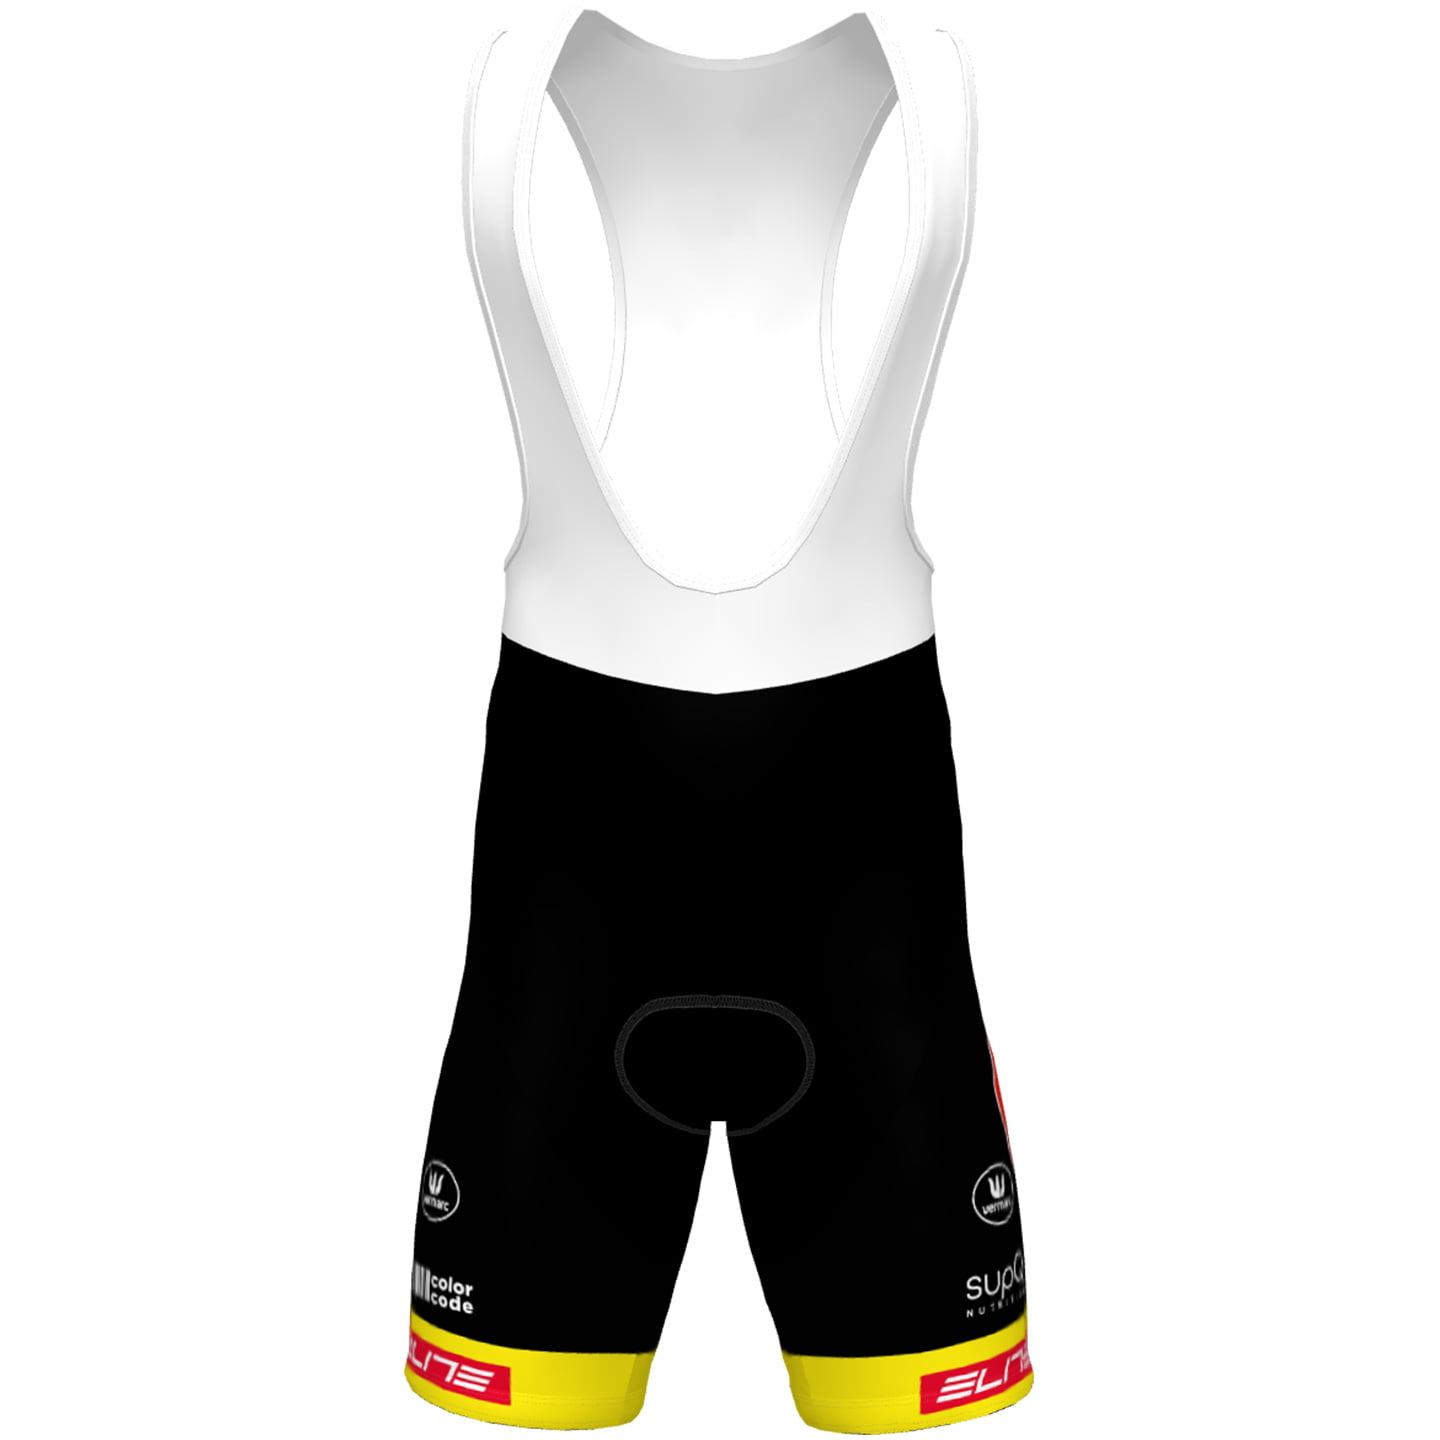 BINGOAL PAUWELS SAUCES WB 2022 Bib Shorts, for men, size L, Cycle shorts, Cycling clothing